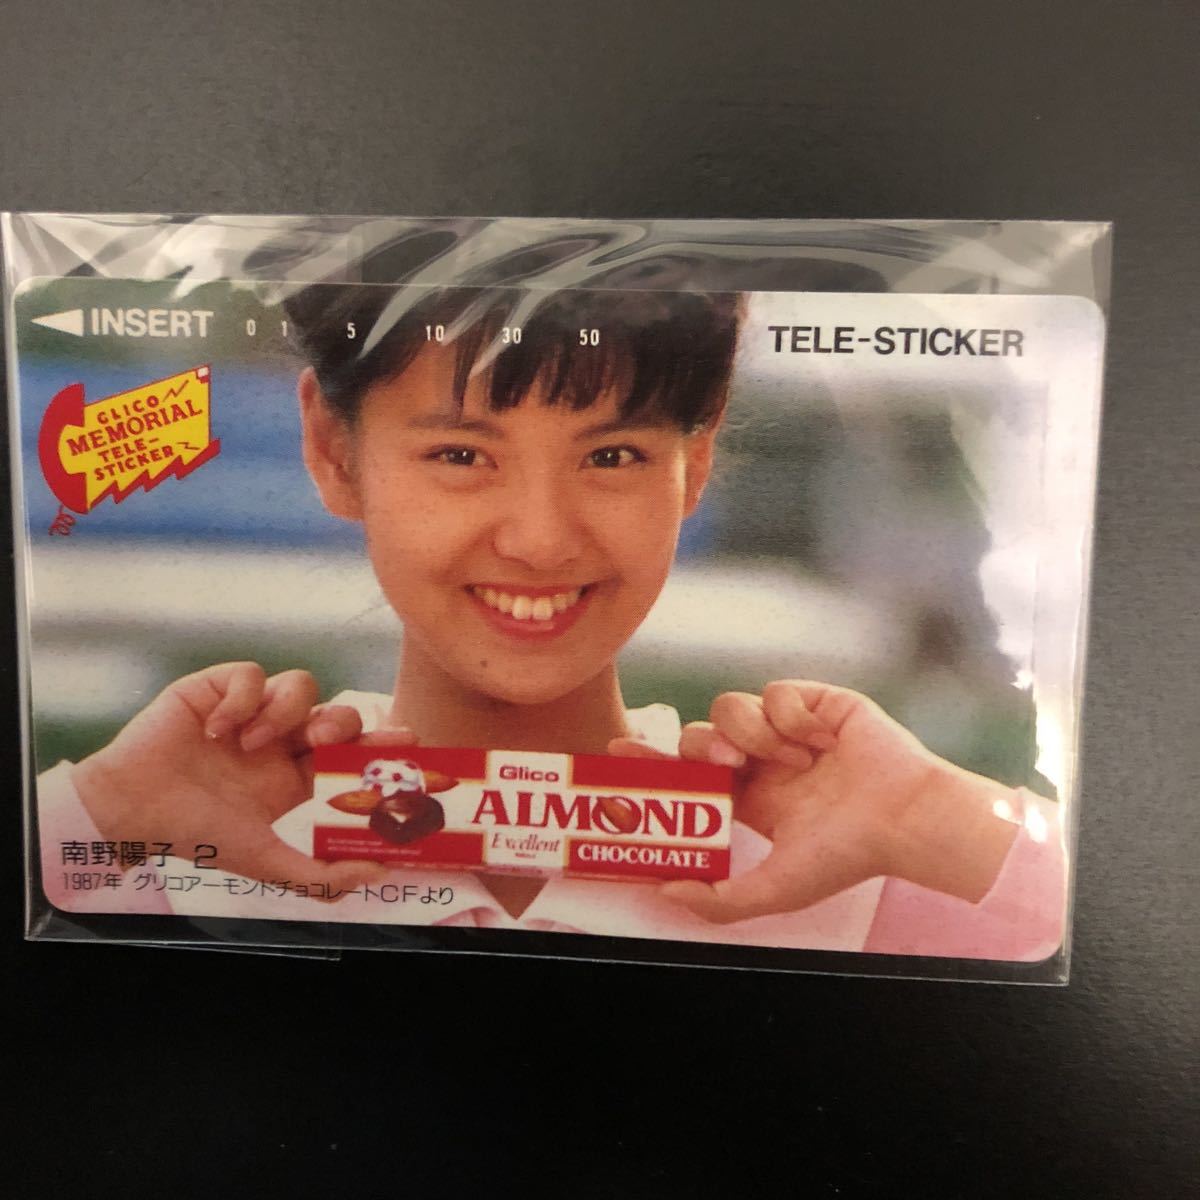  that time thing! unused * Glyco Minamino Yoko se sill chocolate almond chocolate memorial tere sticker /2 pieces set *